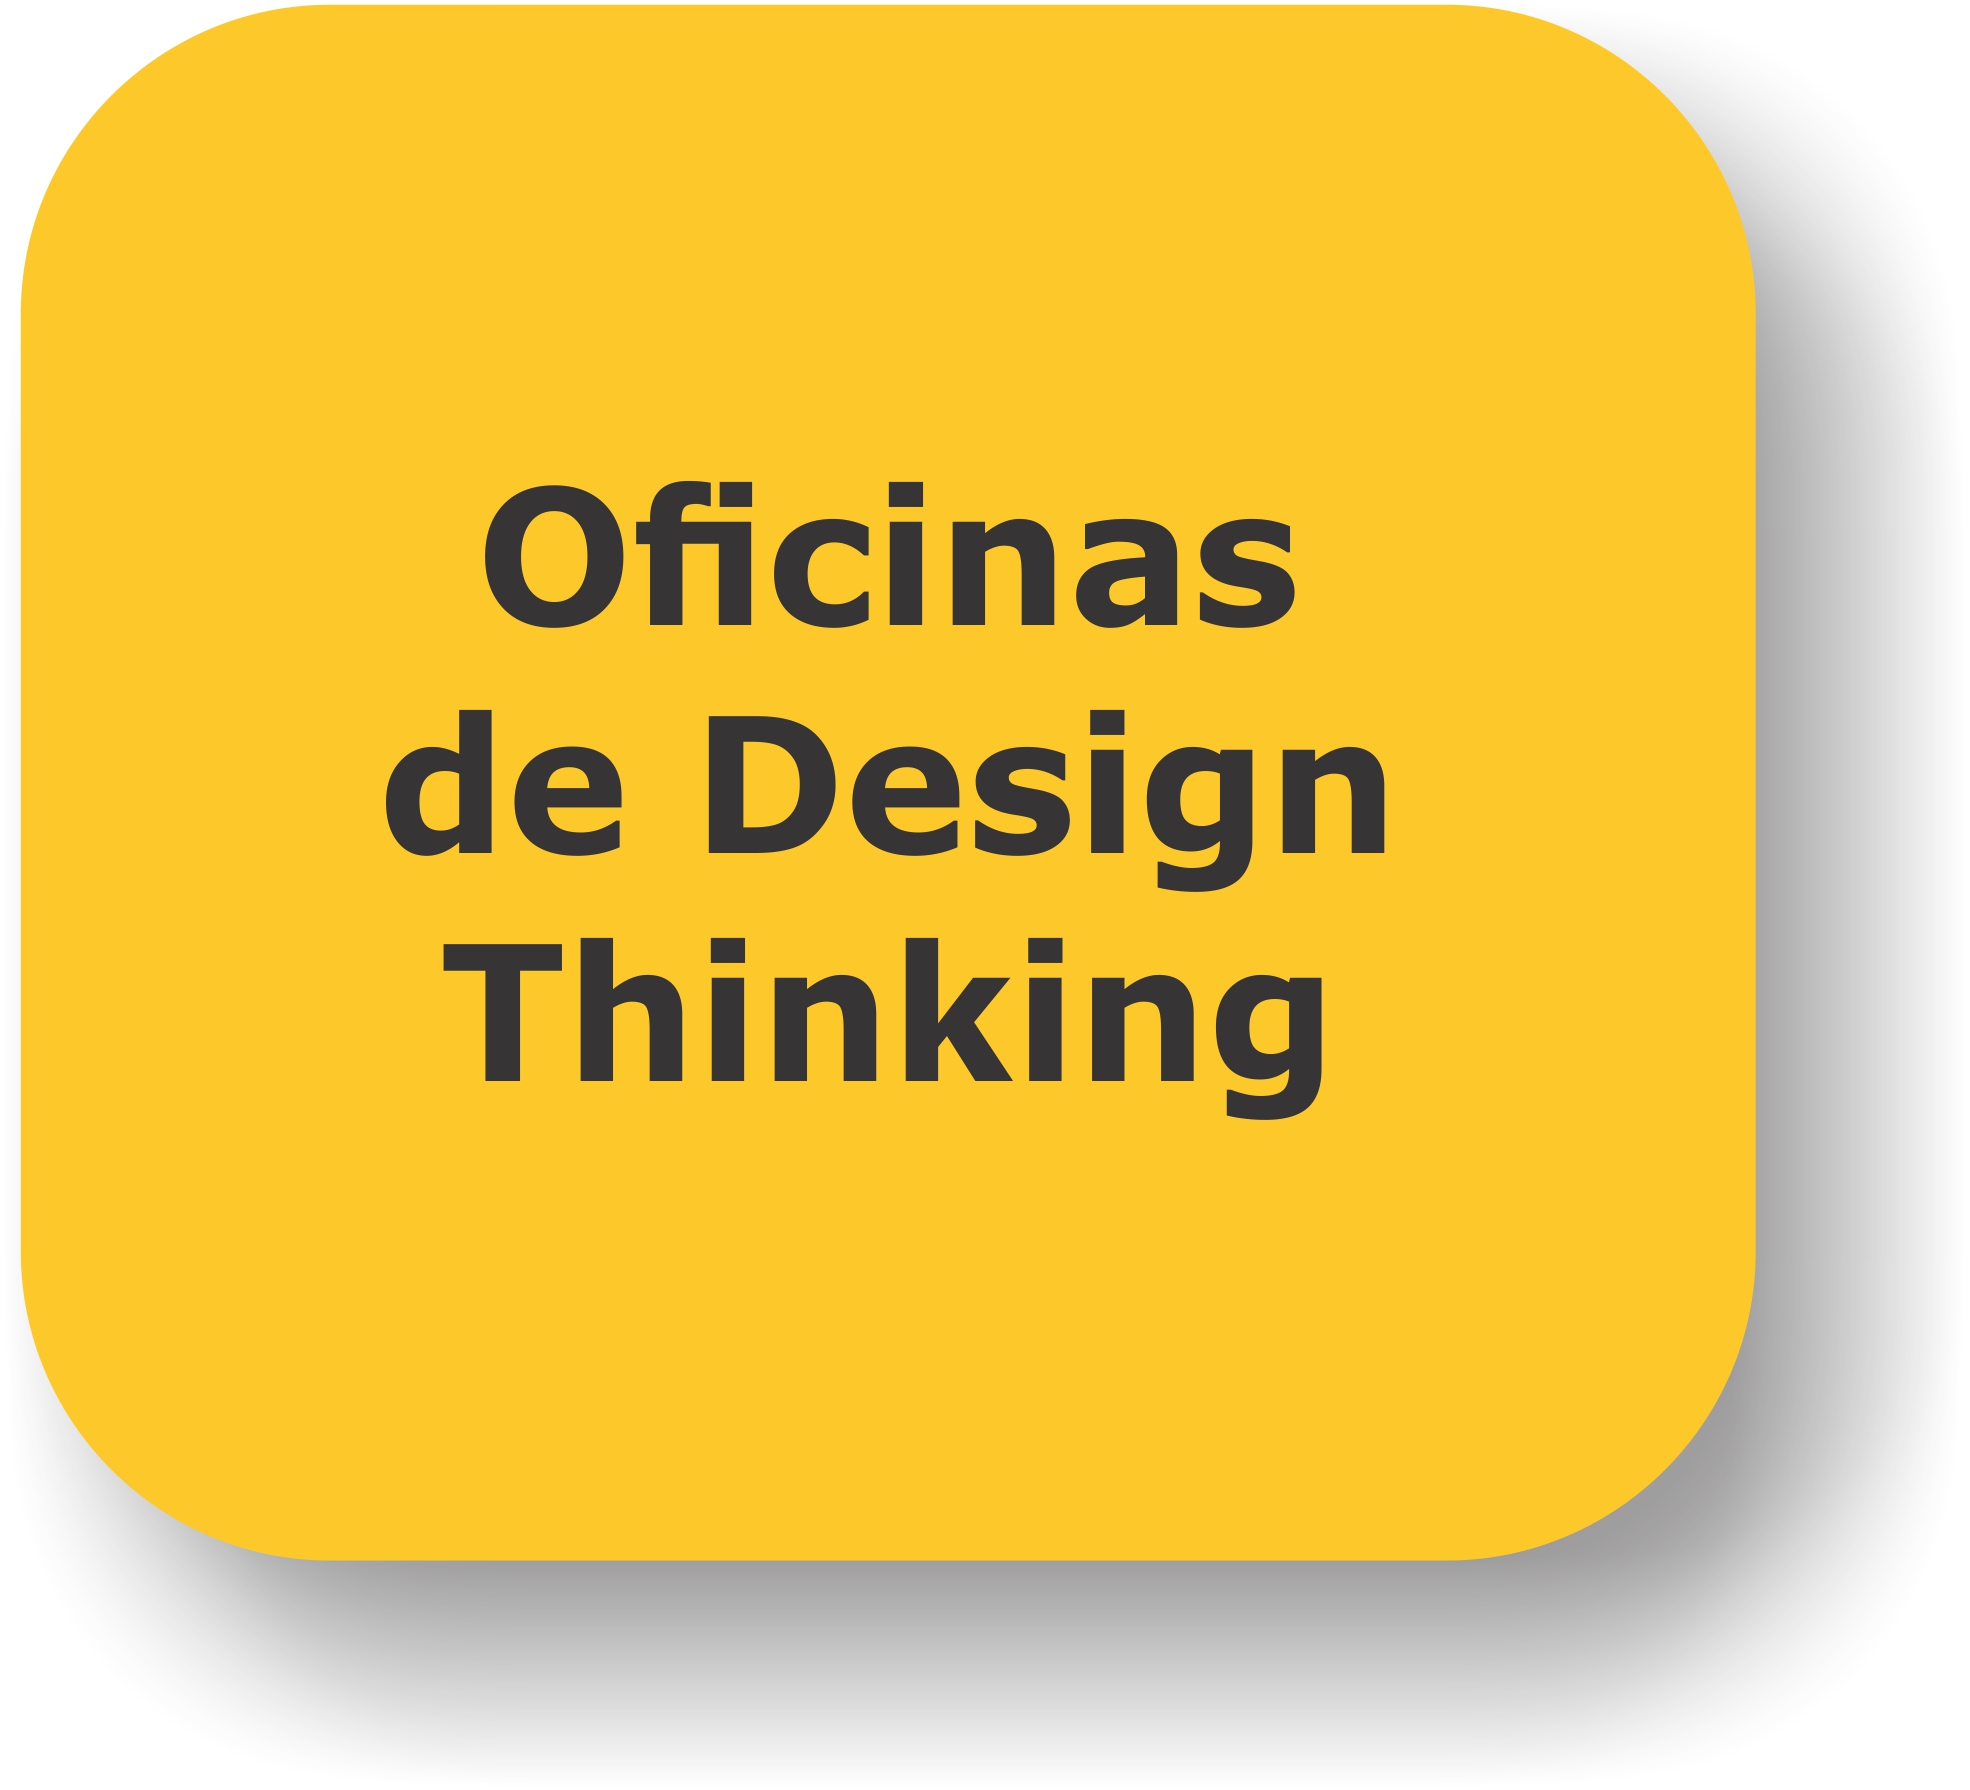 Oficinas de Design Thinking